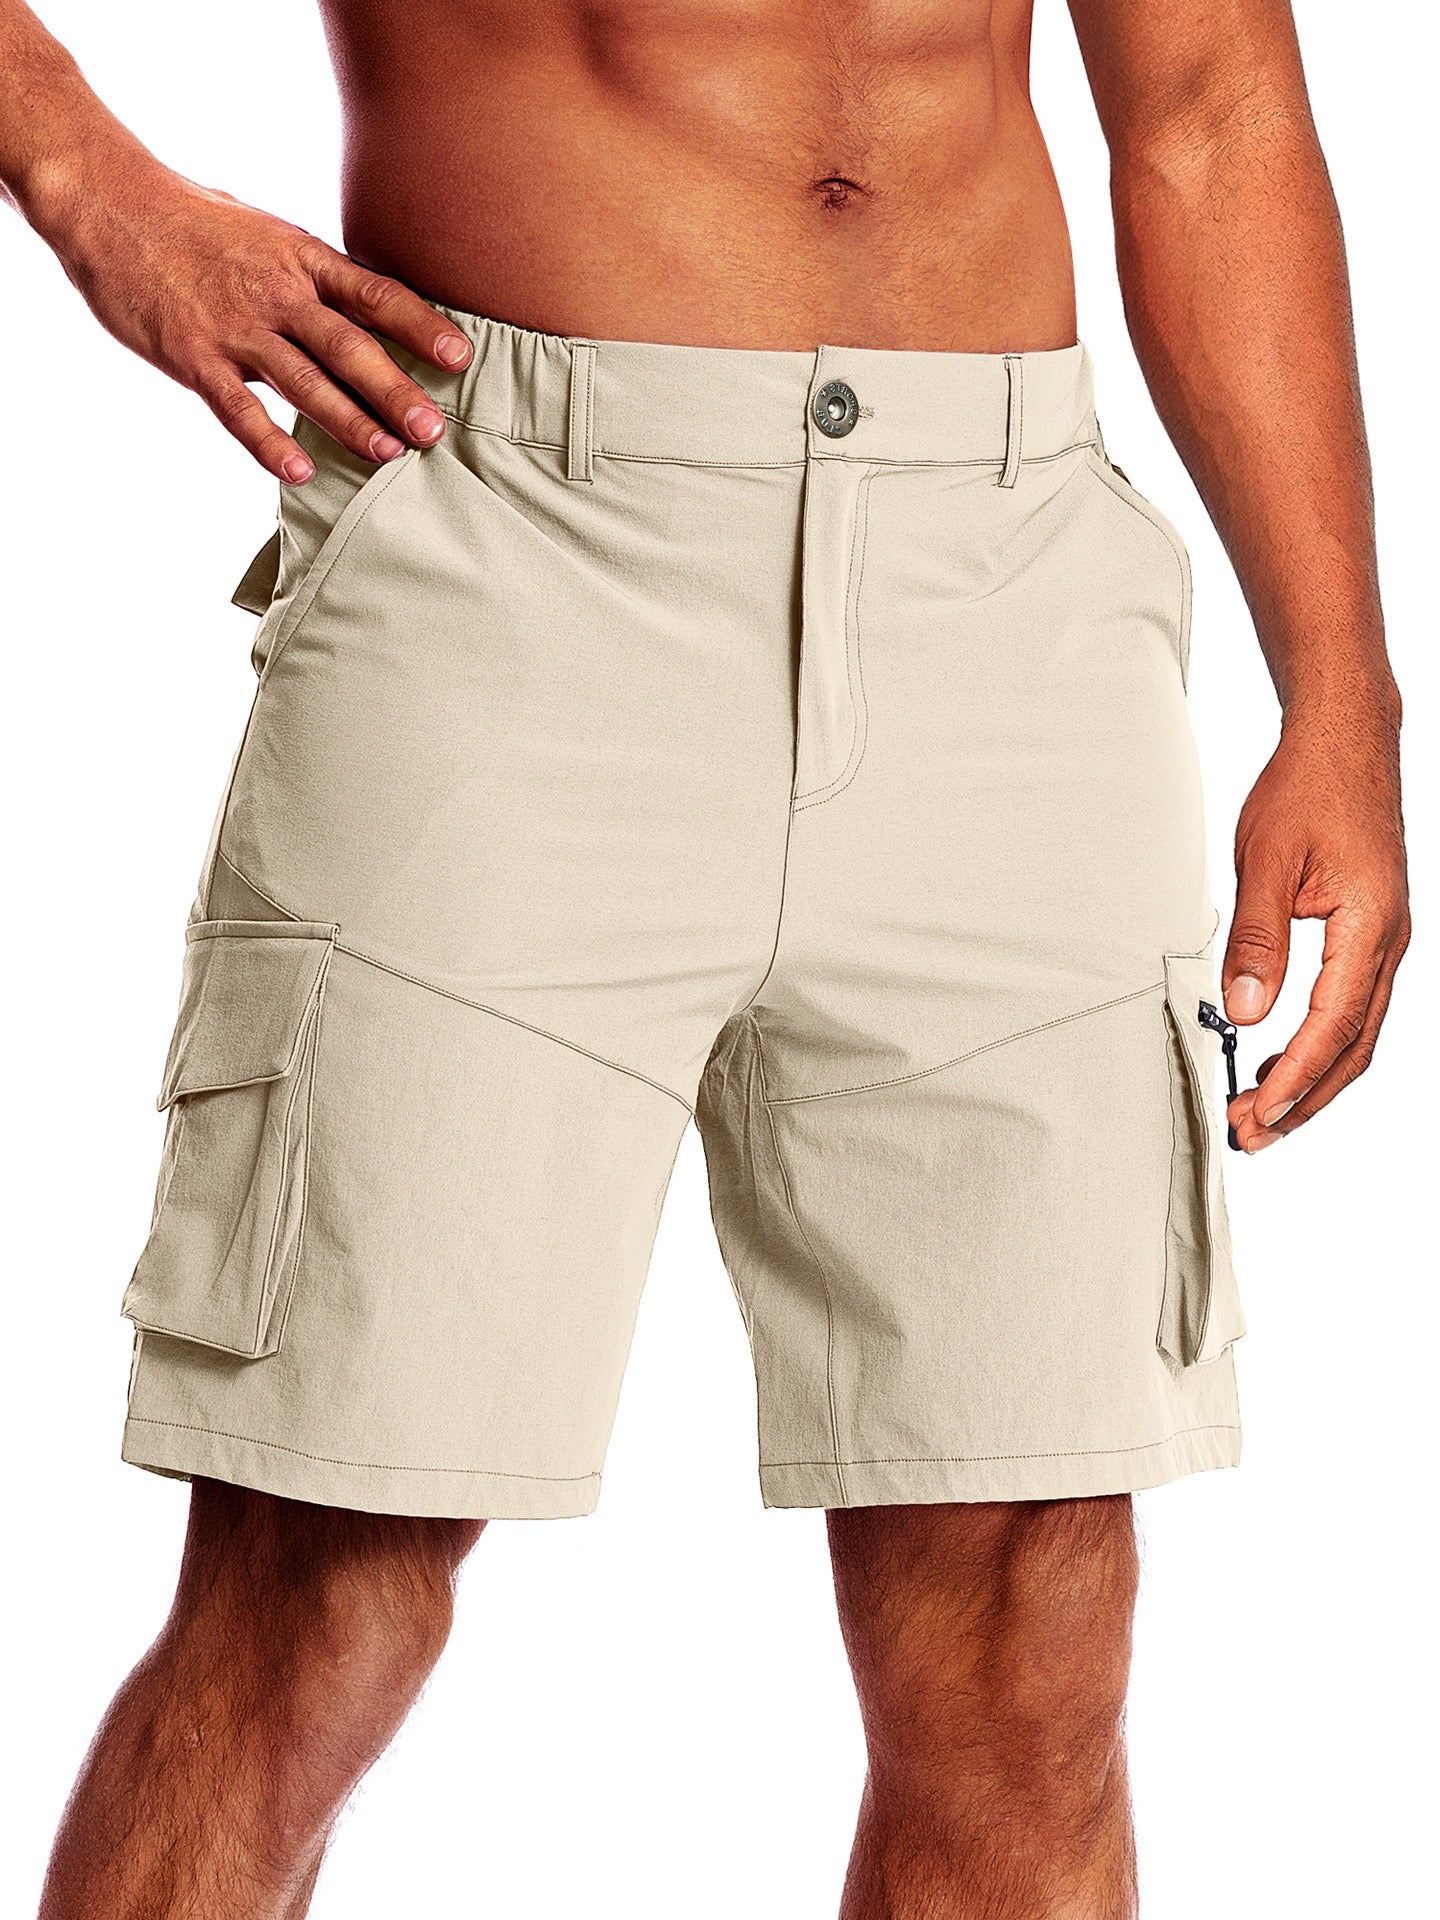 Men's Hiking Shorts Tactical Shorts Military Summer Outdoor Ripstop Breathable Shorts Bottoms Zipper Pocket